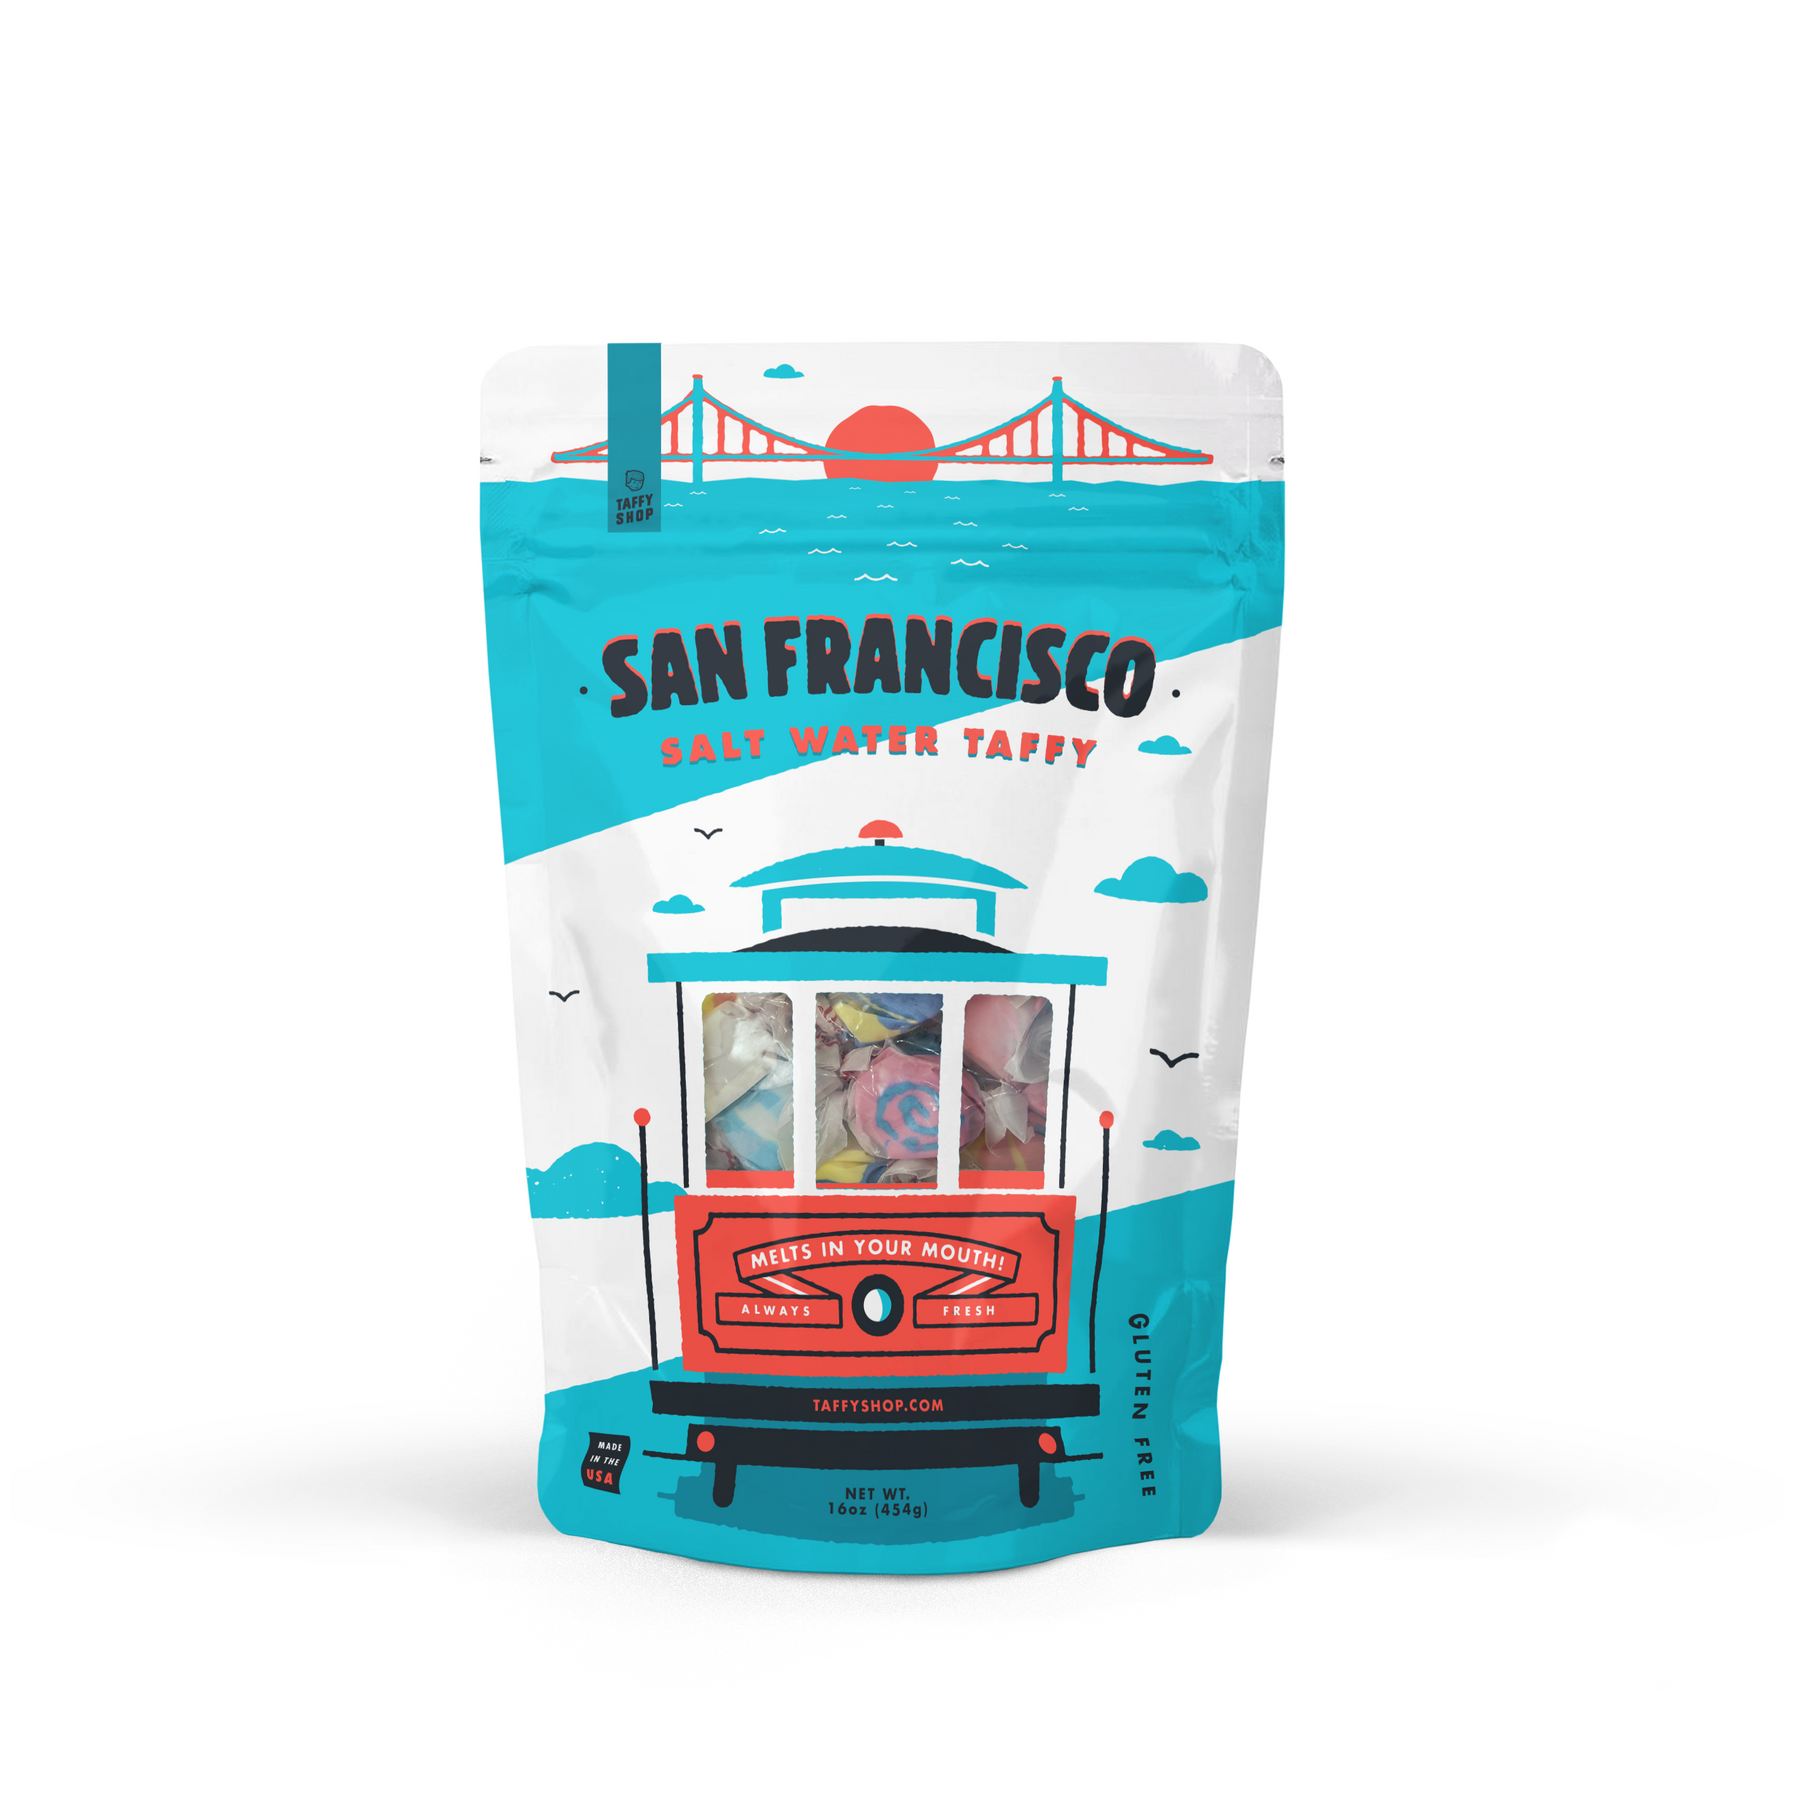 San Francisco Salt Water Taffy, just a trolley ride away.